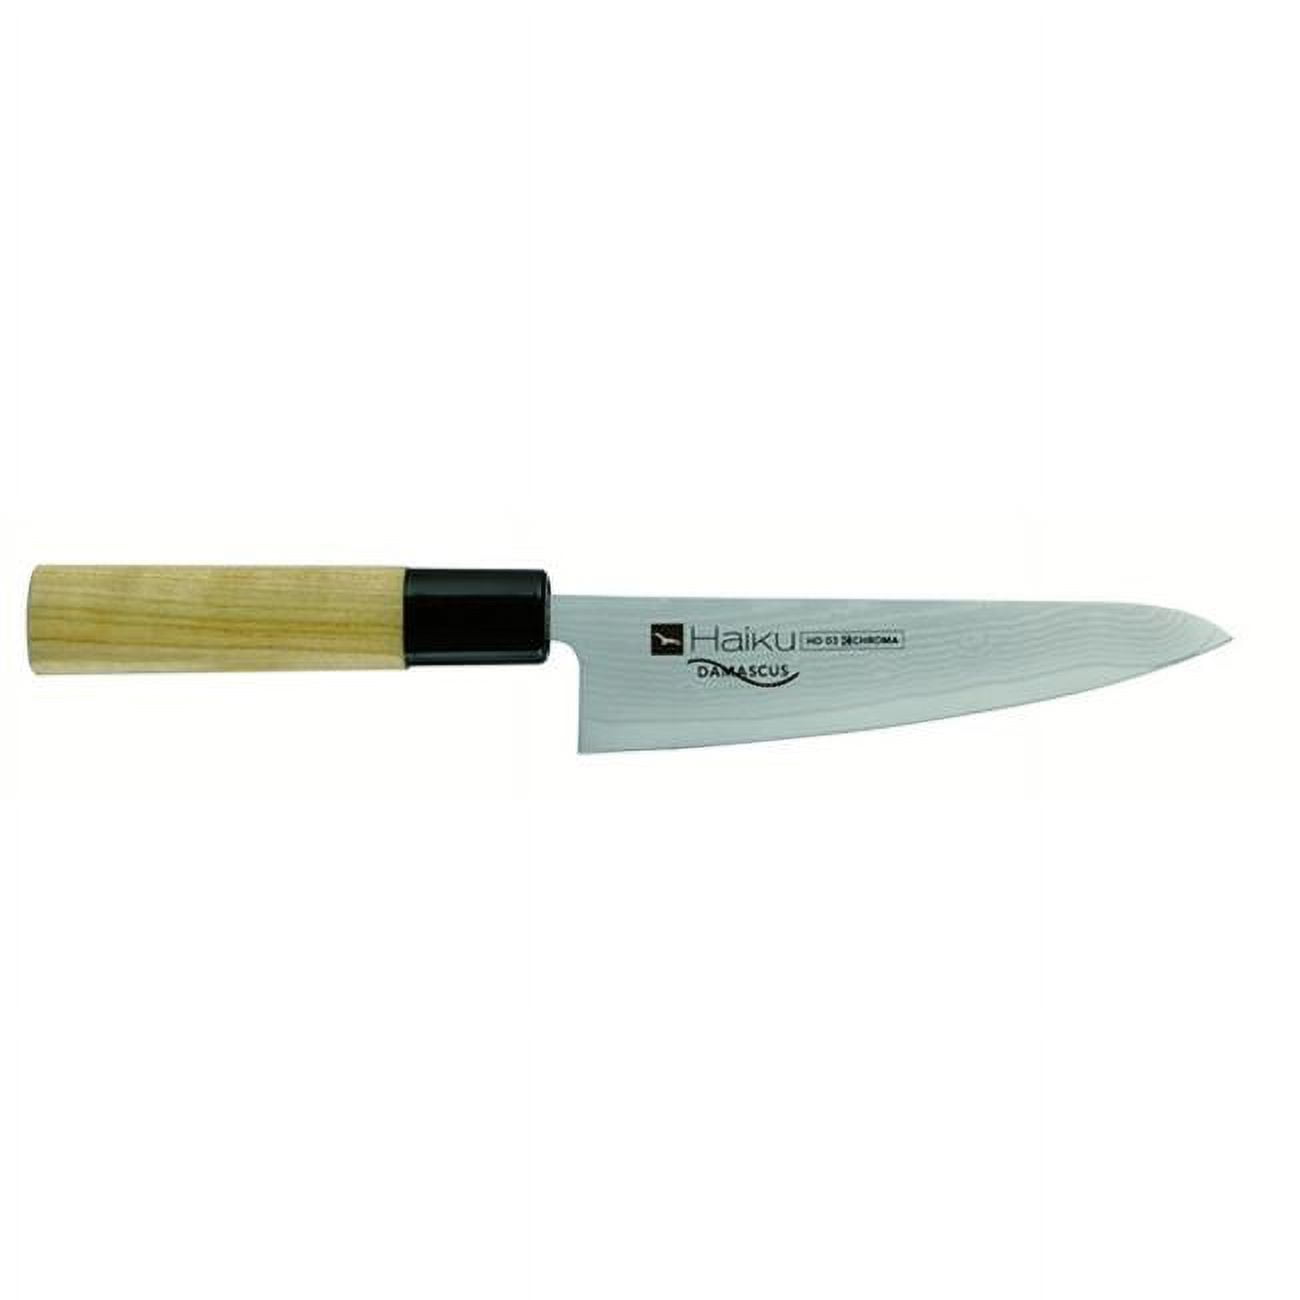 Chroma(TM) A PlastiColor(R) Company Chroma HD 03 Haiku Damascus 5.75 in. Chef Knife